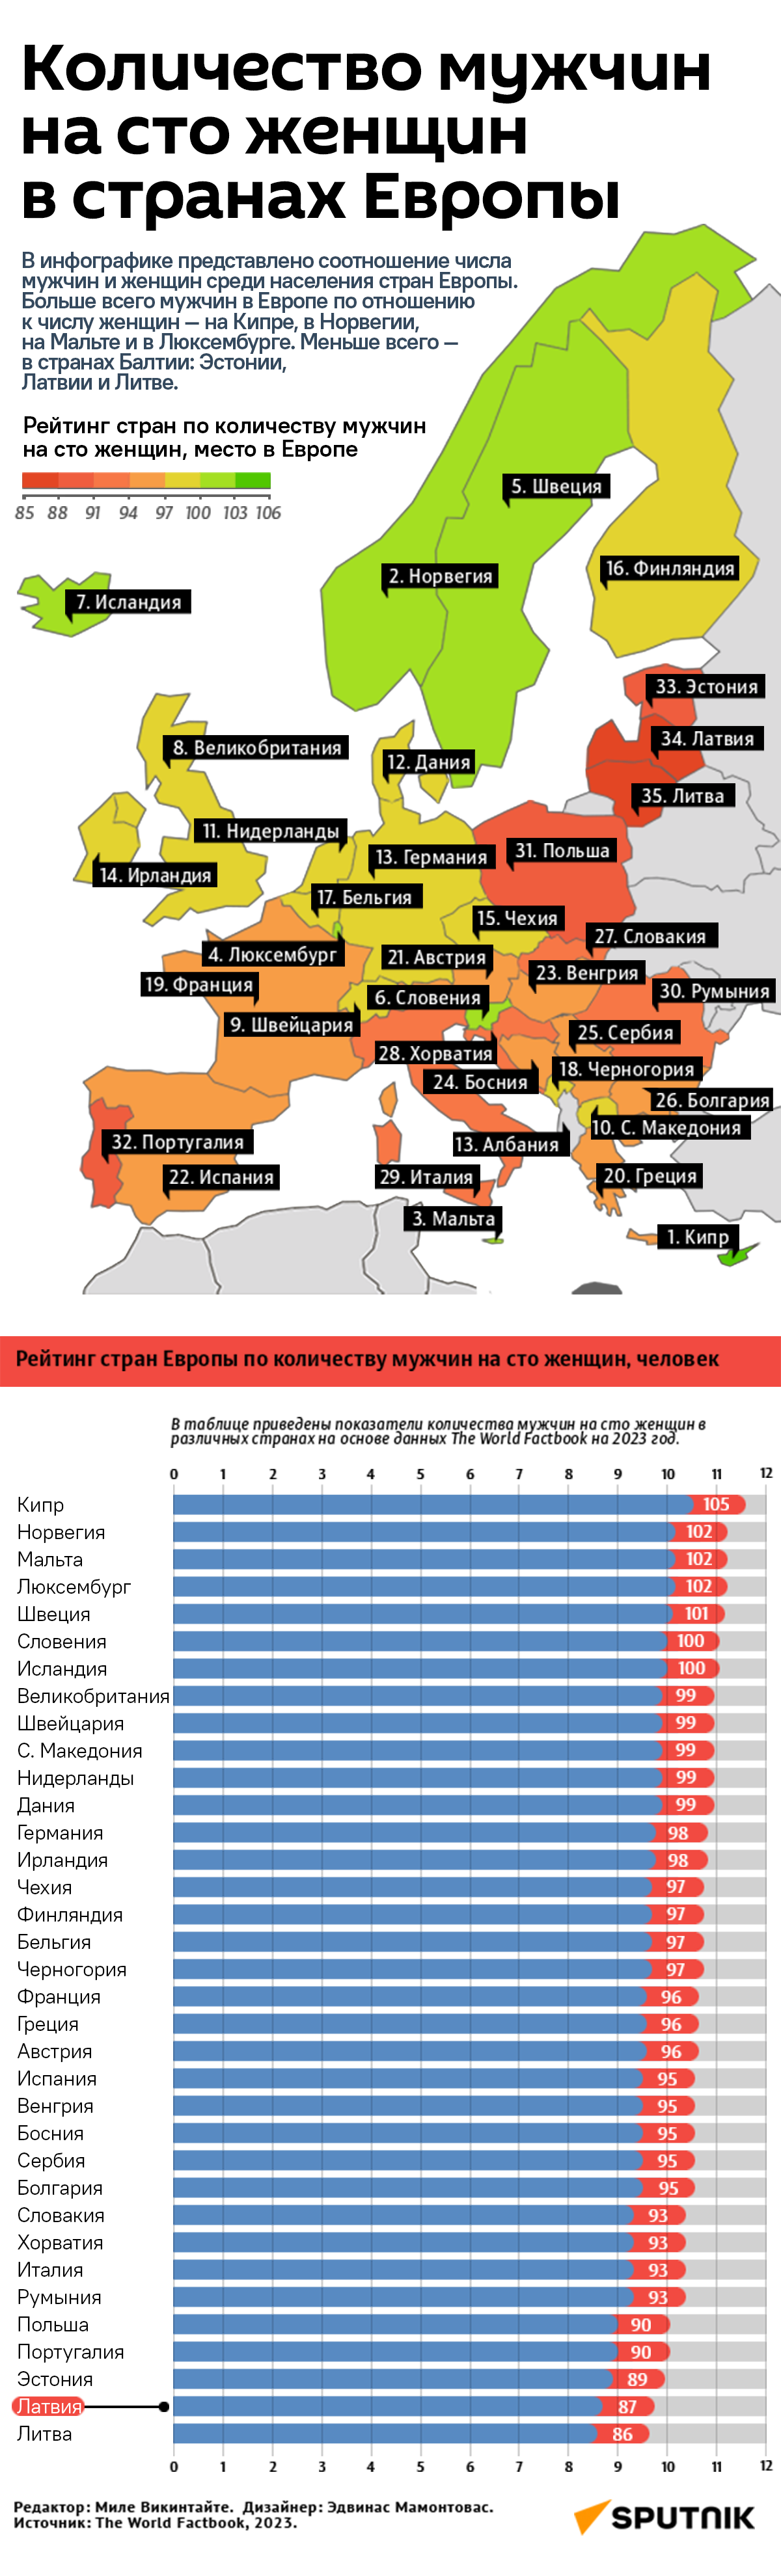 Количество мужчин на сто женщин в странах Европы  - Sputnik Латвия